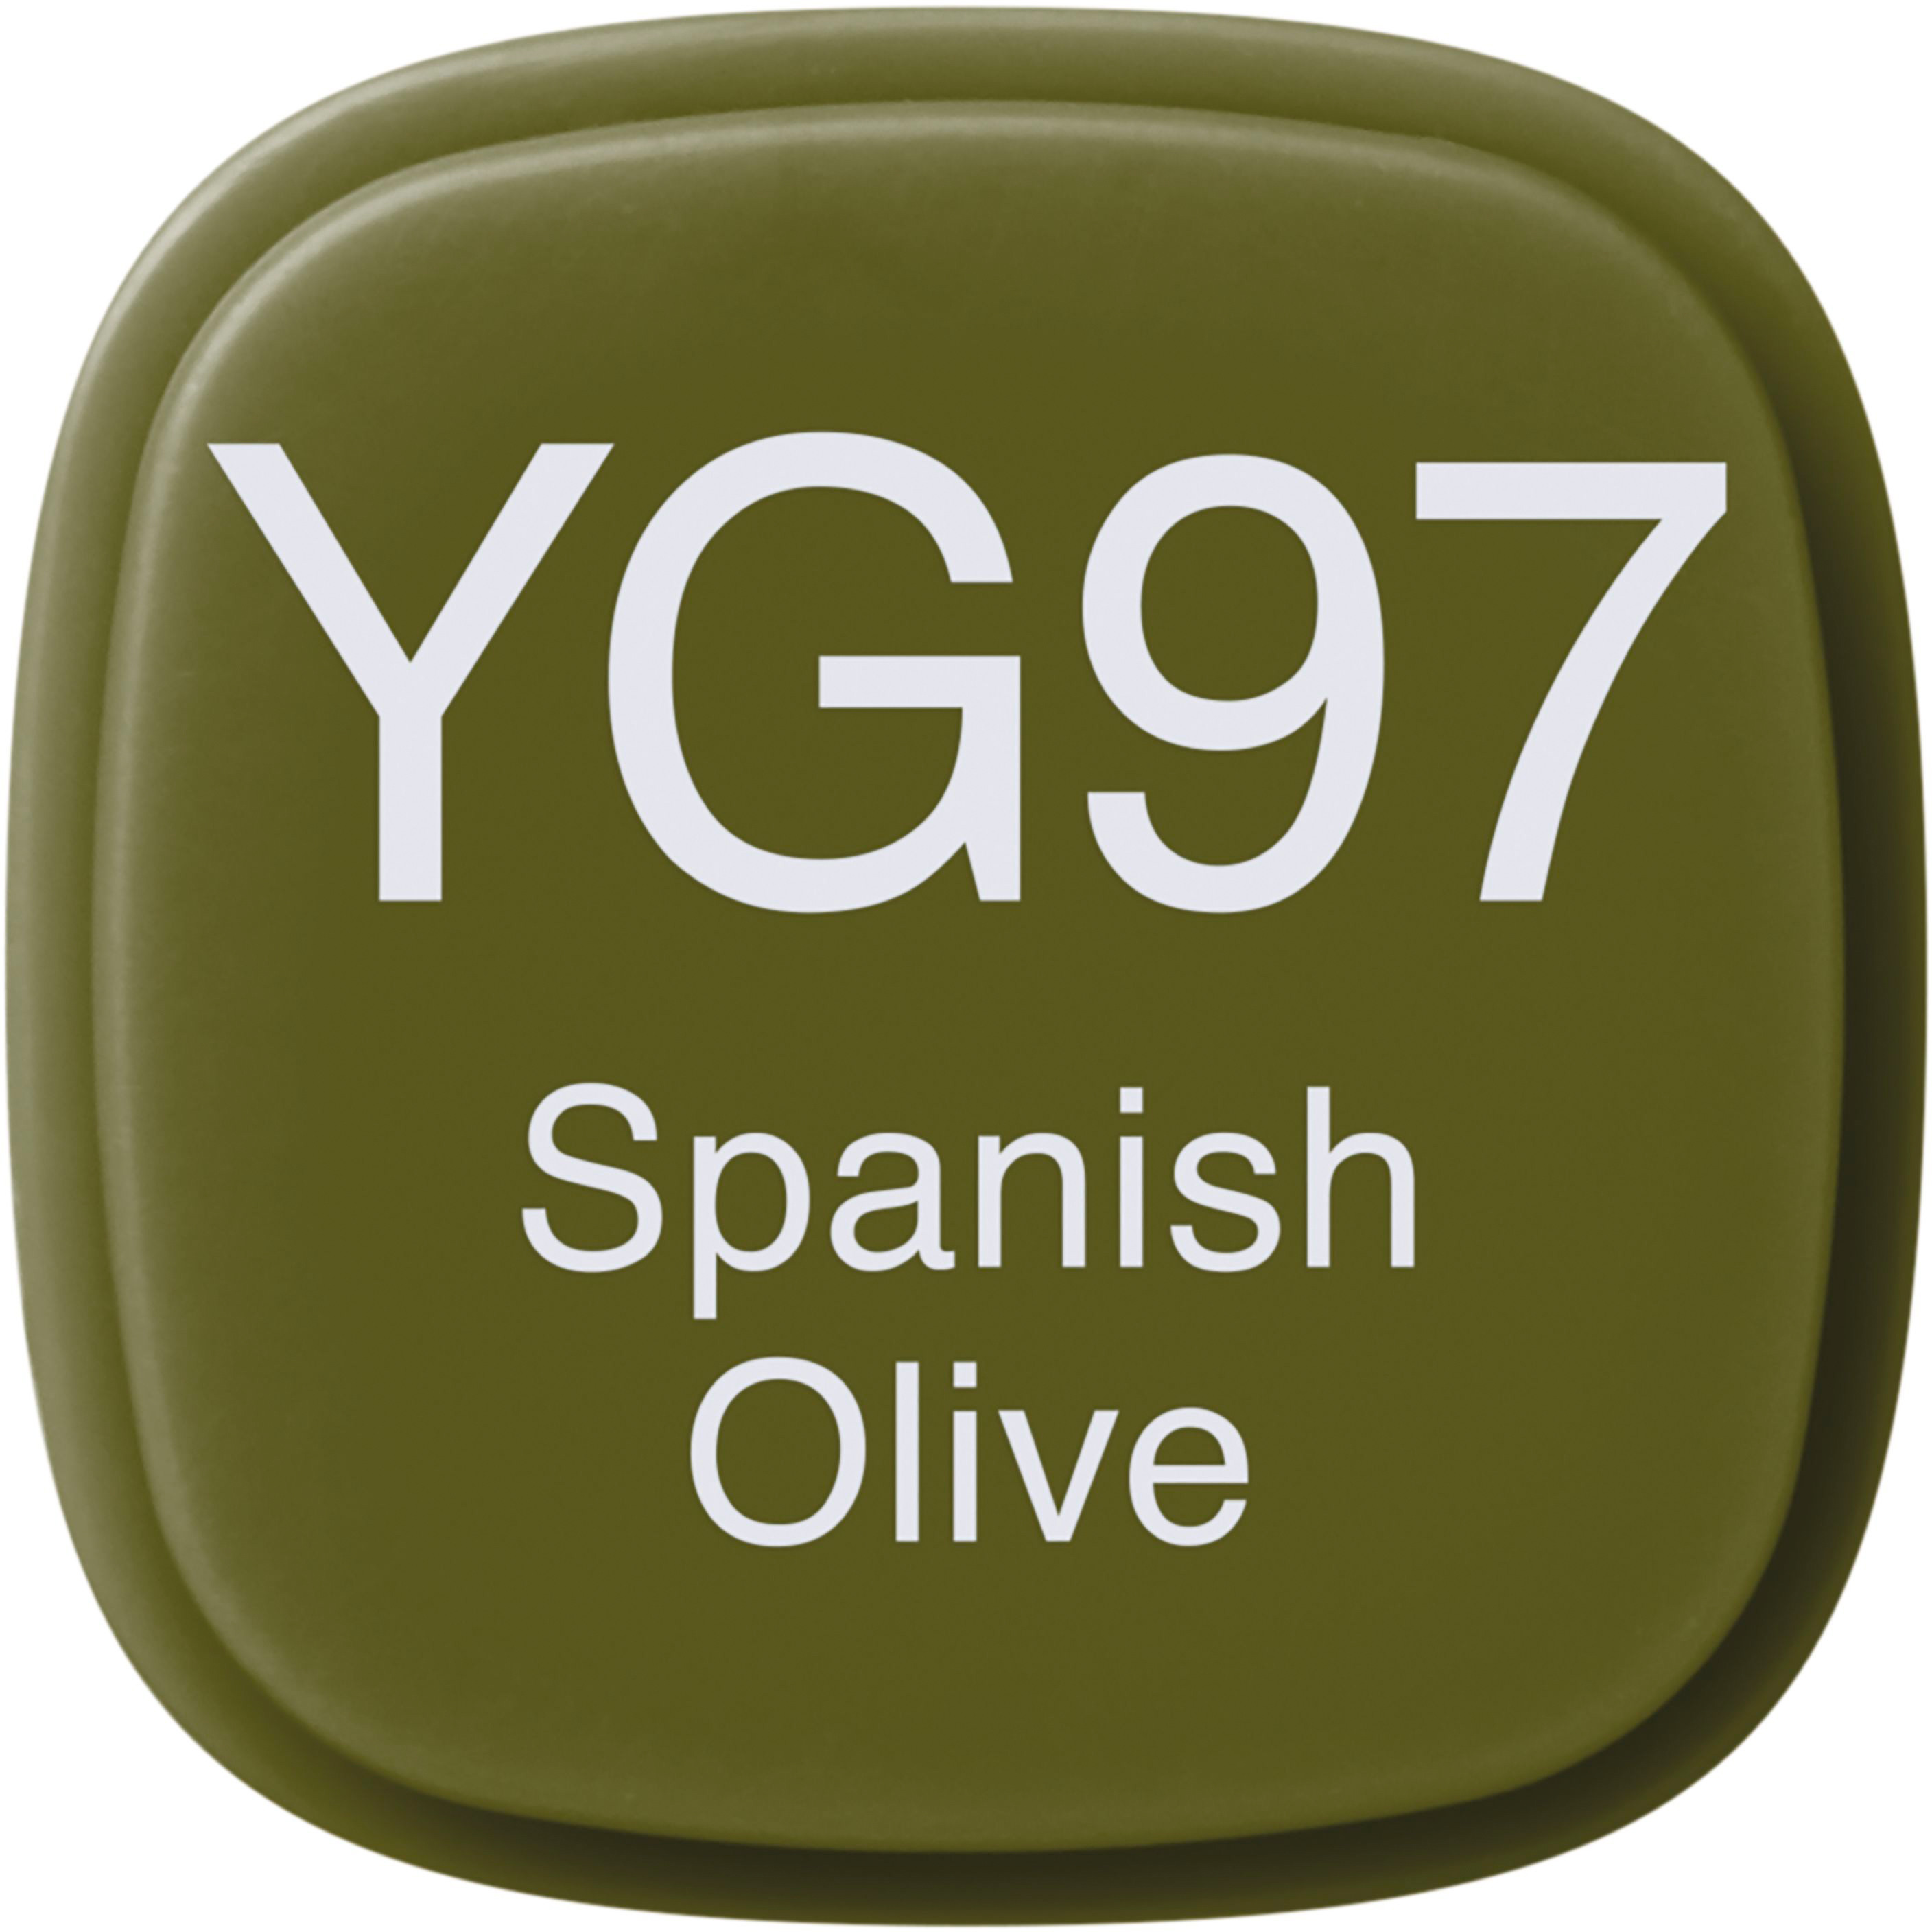 COPIC Marker Classic 2007559 YG97 - Spanish Olive